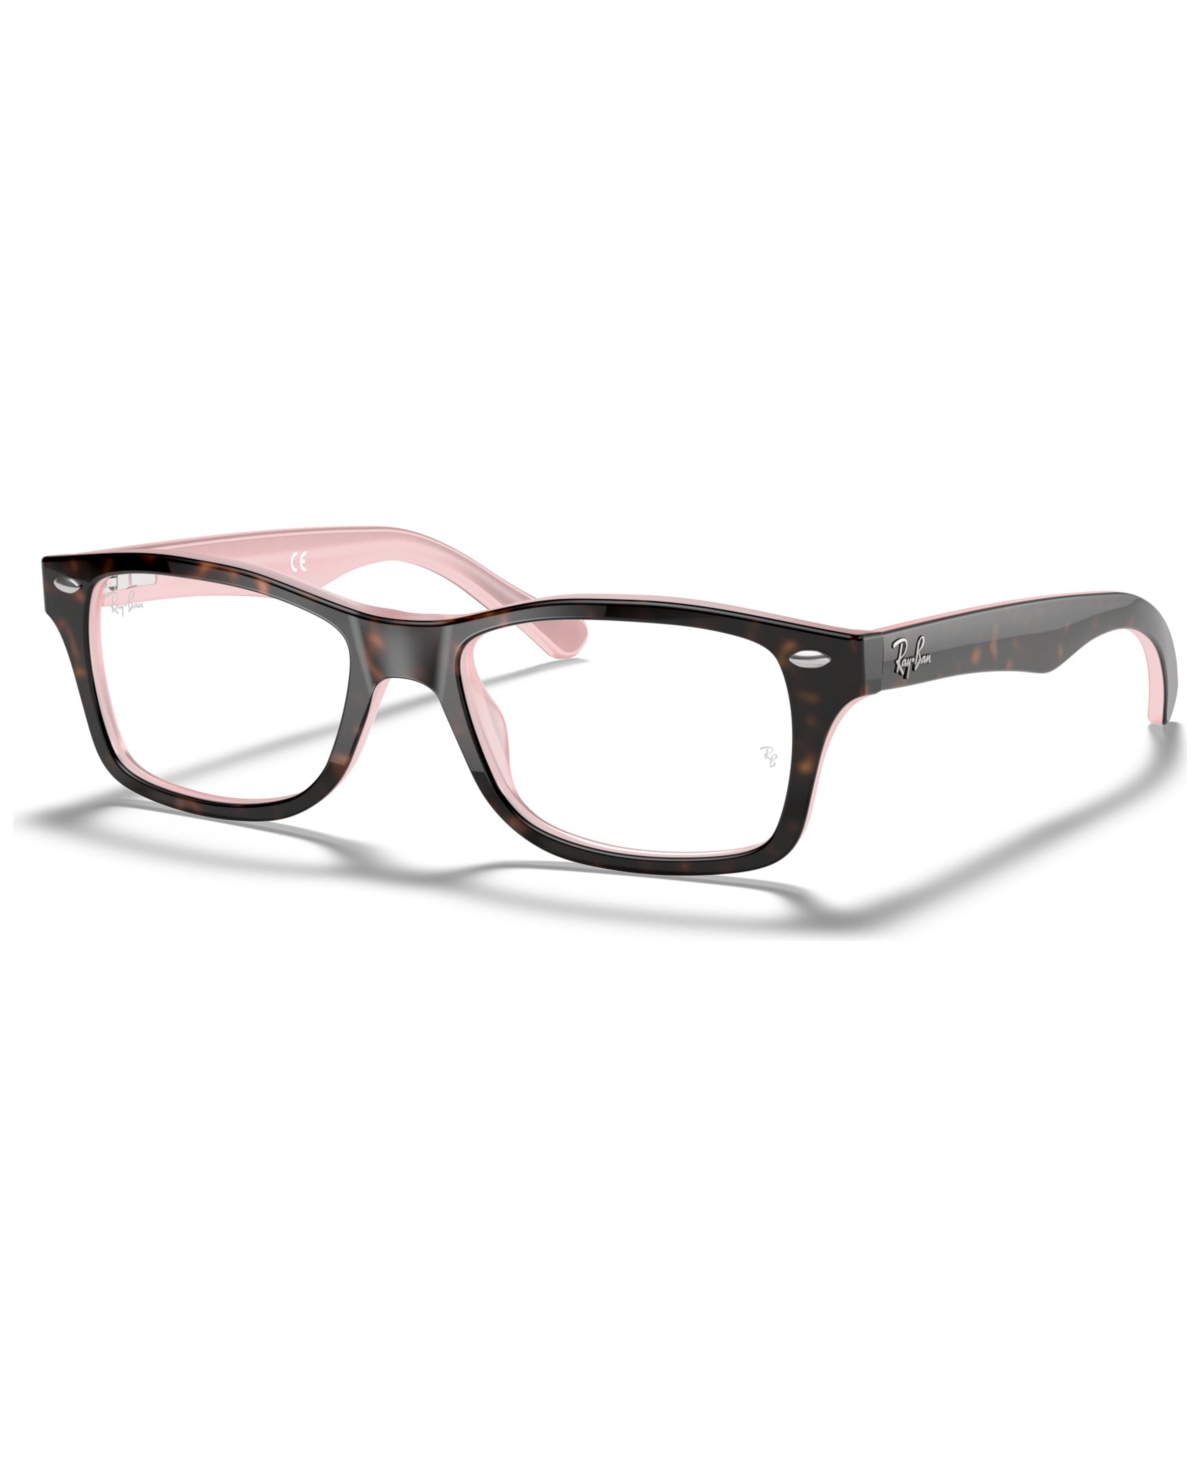 RY1531 Child Square Eyeglasses - Pink